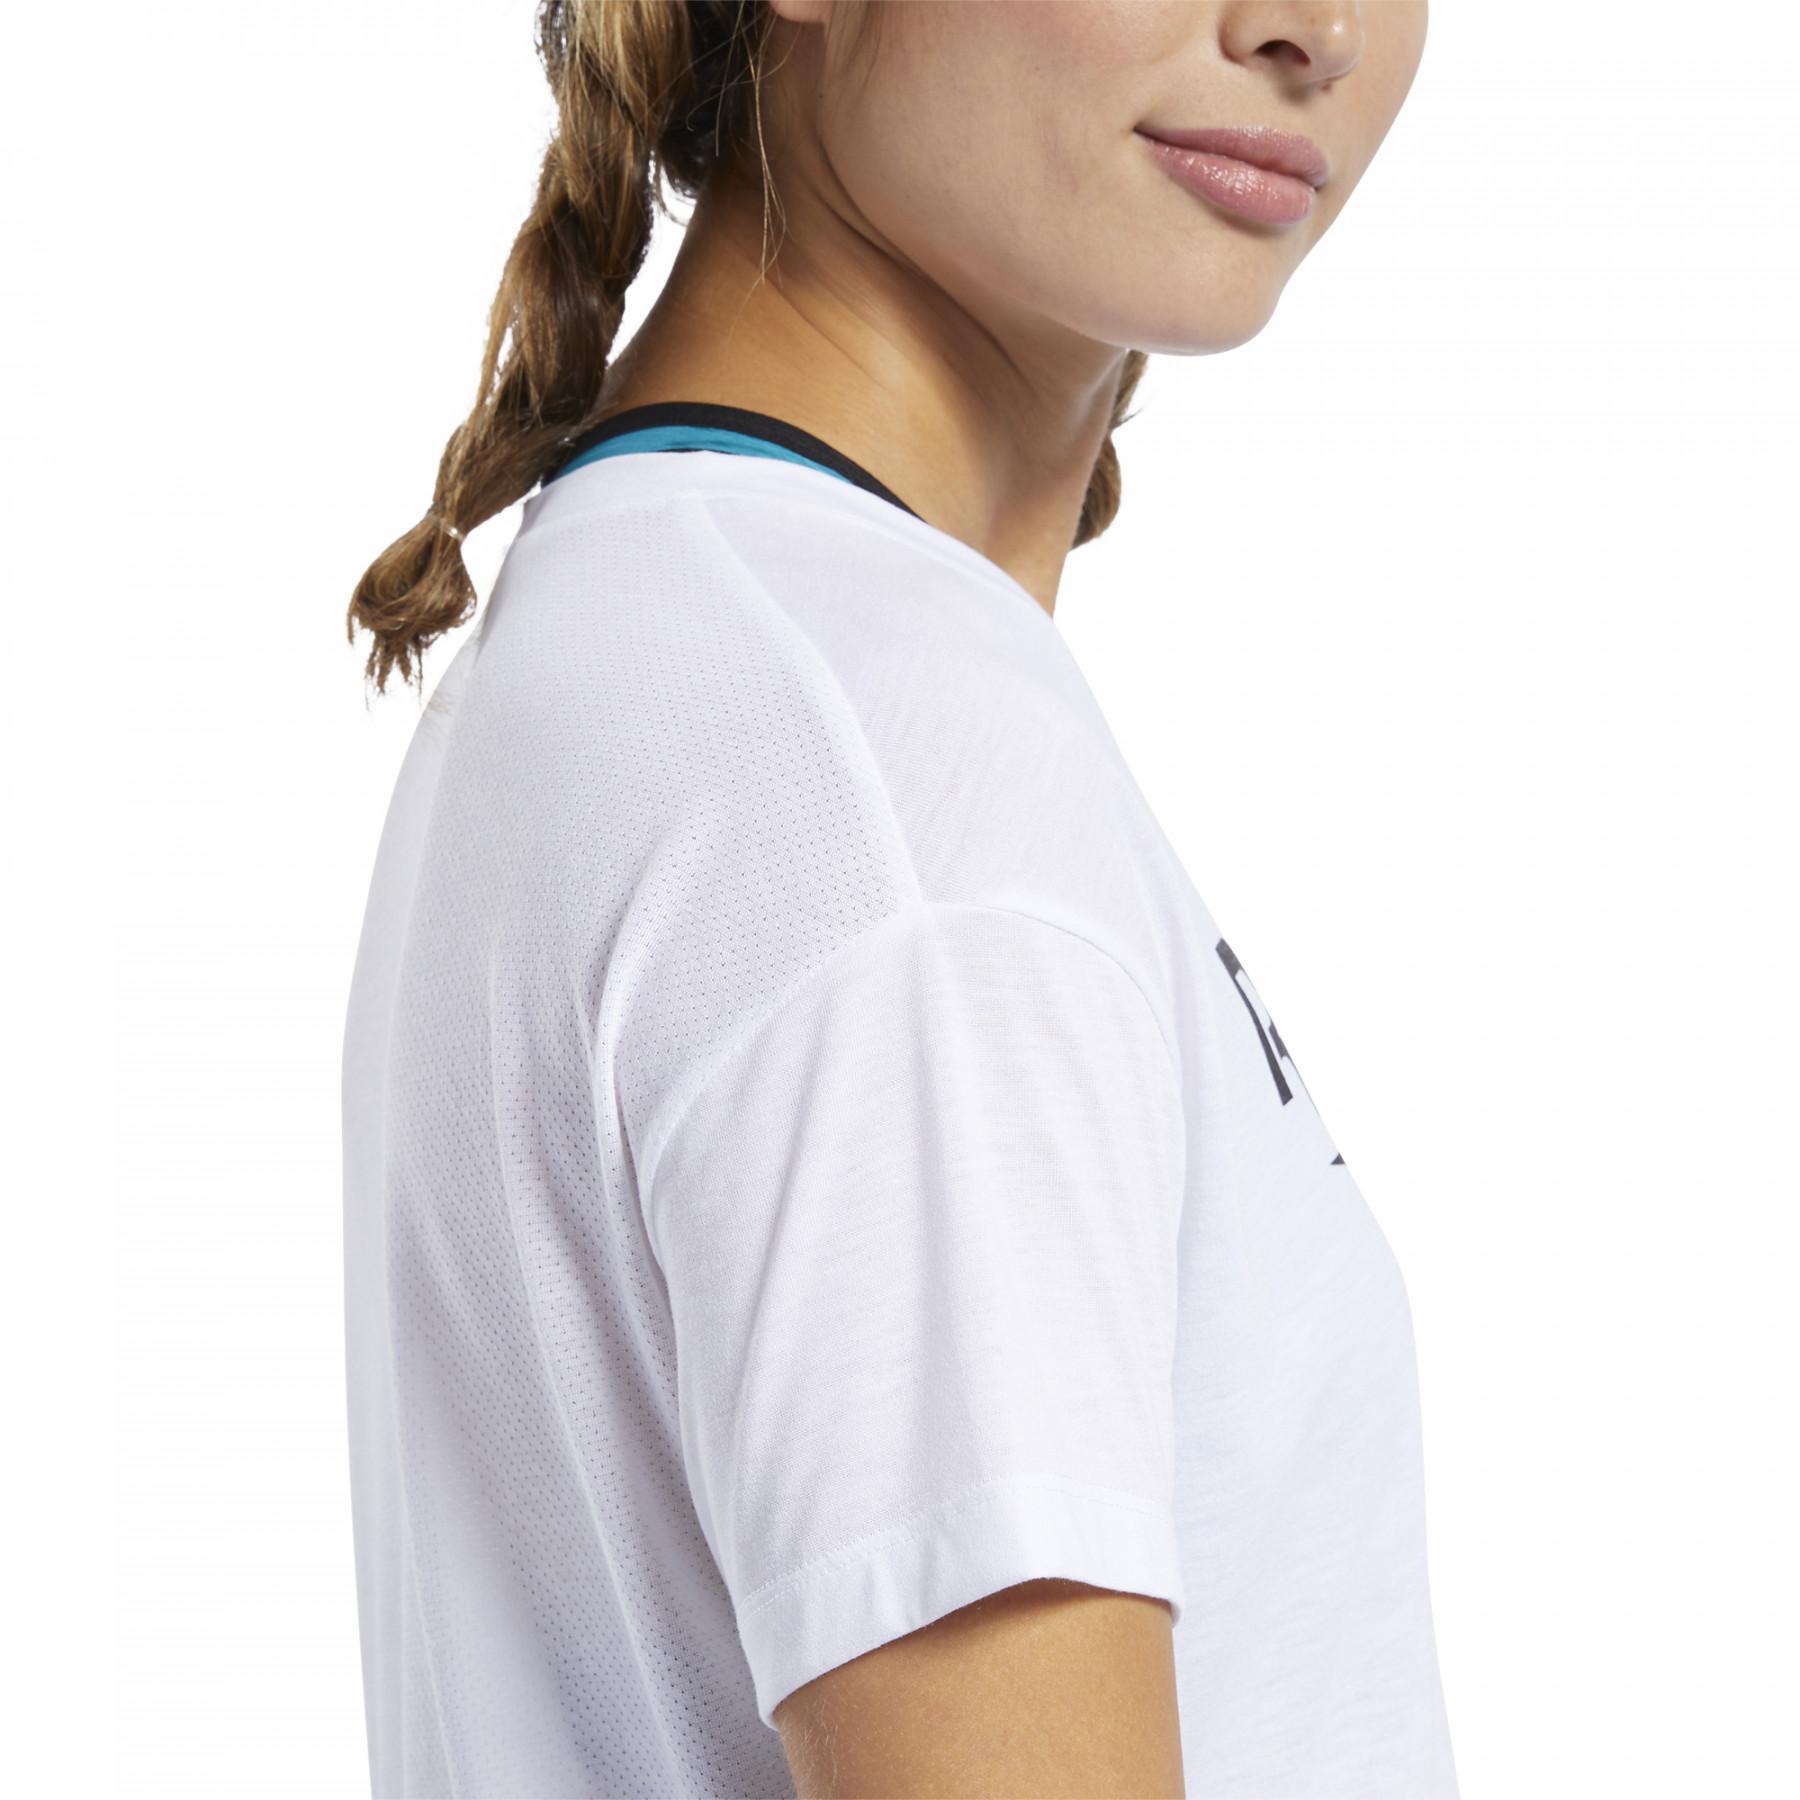 Frauen-T-Shirt Reebok Workout Ready Supremium Logo